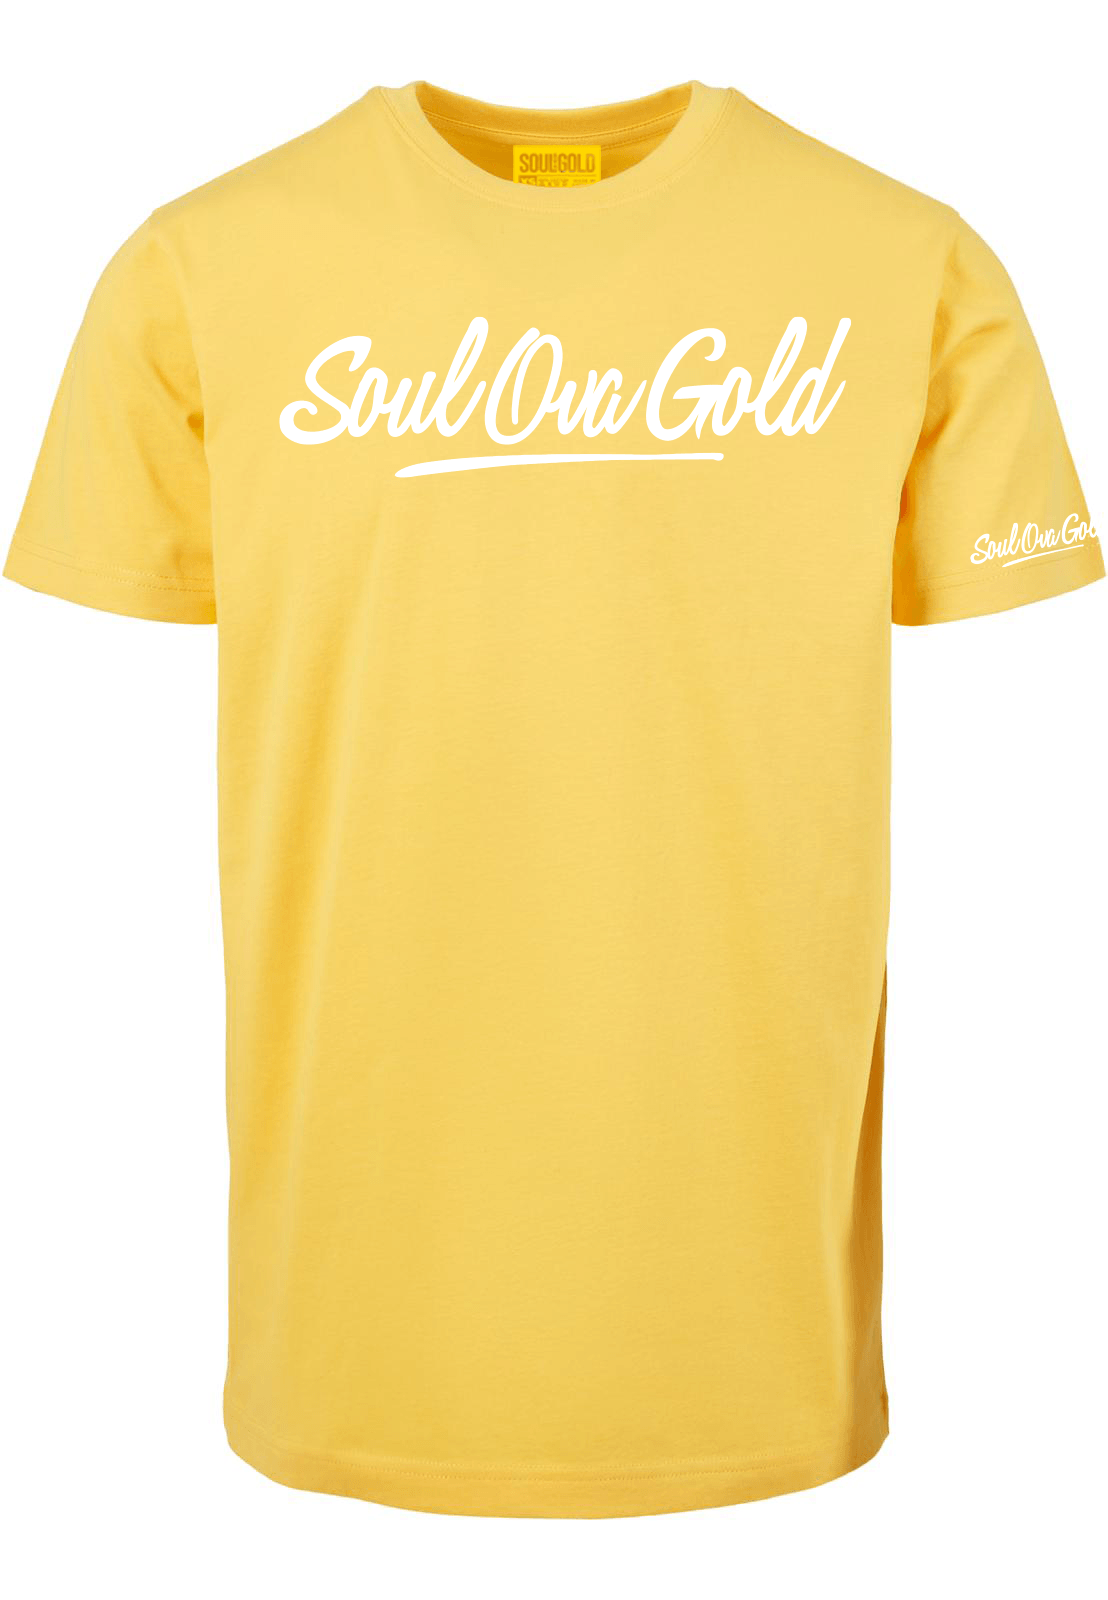 Soul Ova Gold Men's Tees Stick 2 The Script Classic fit T-Shirt (Taxi Yellow)